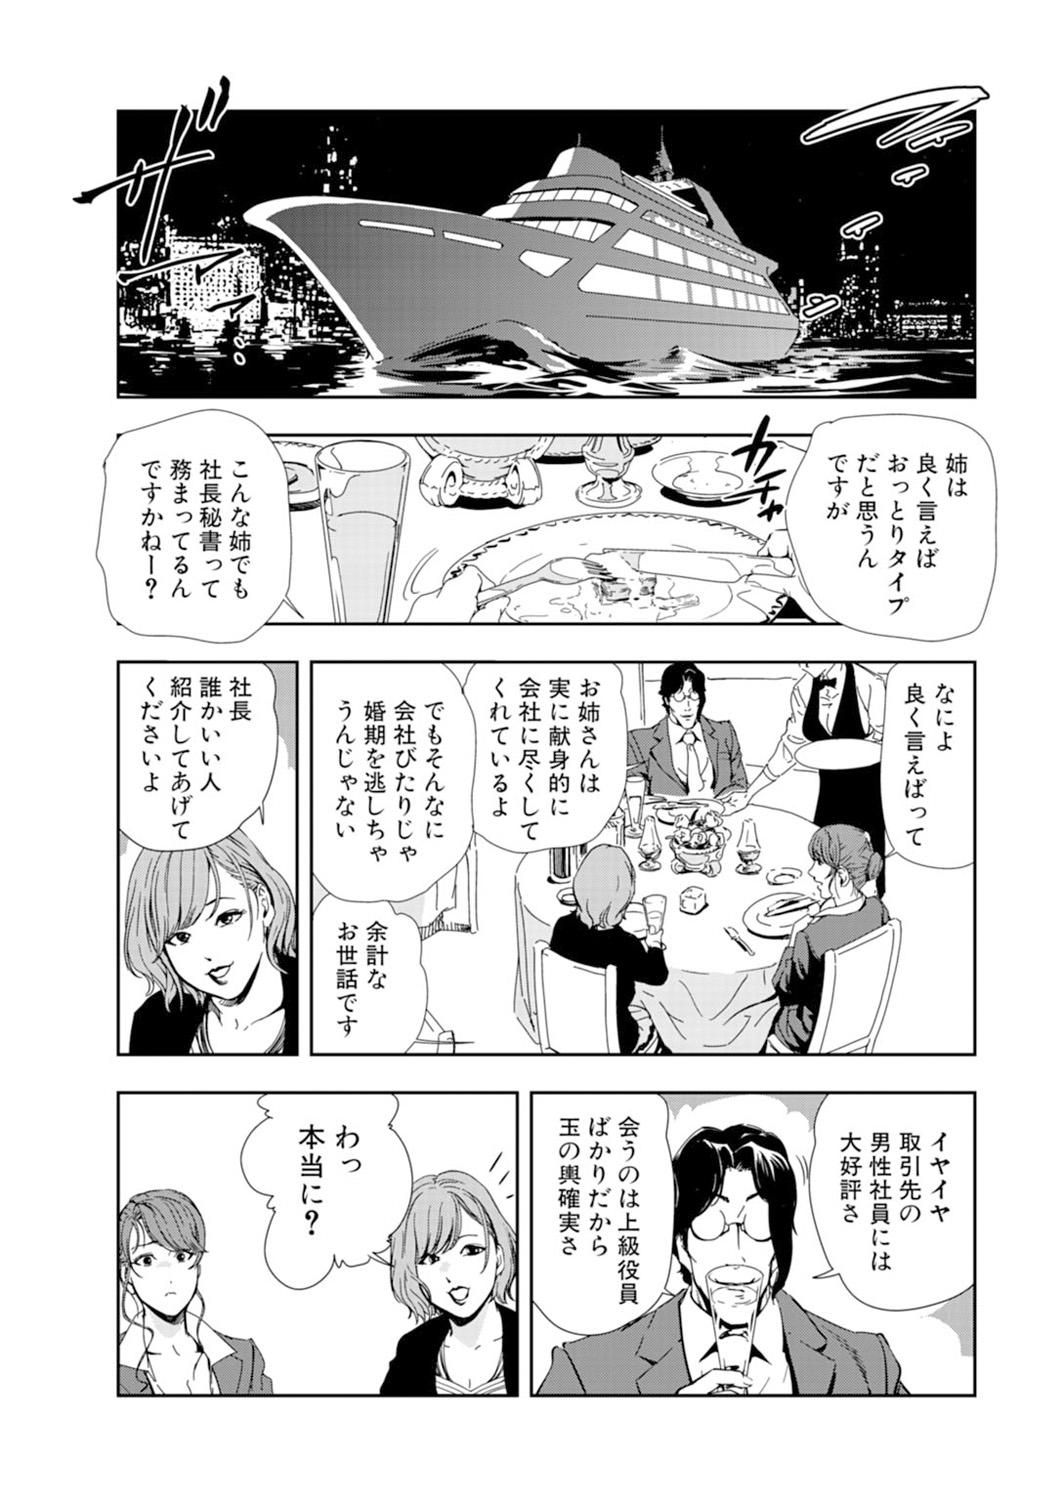 Pasivo Nikuhisyo Yukiko 14 De Quatro - Page 9